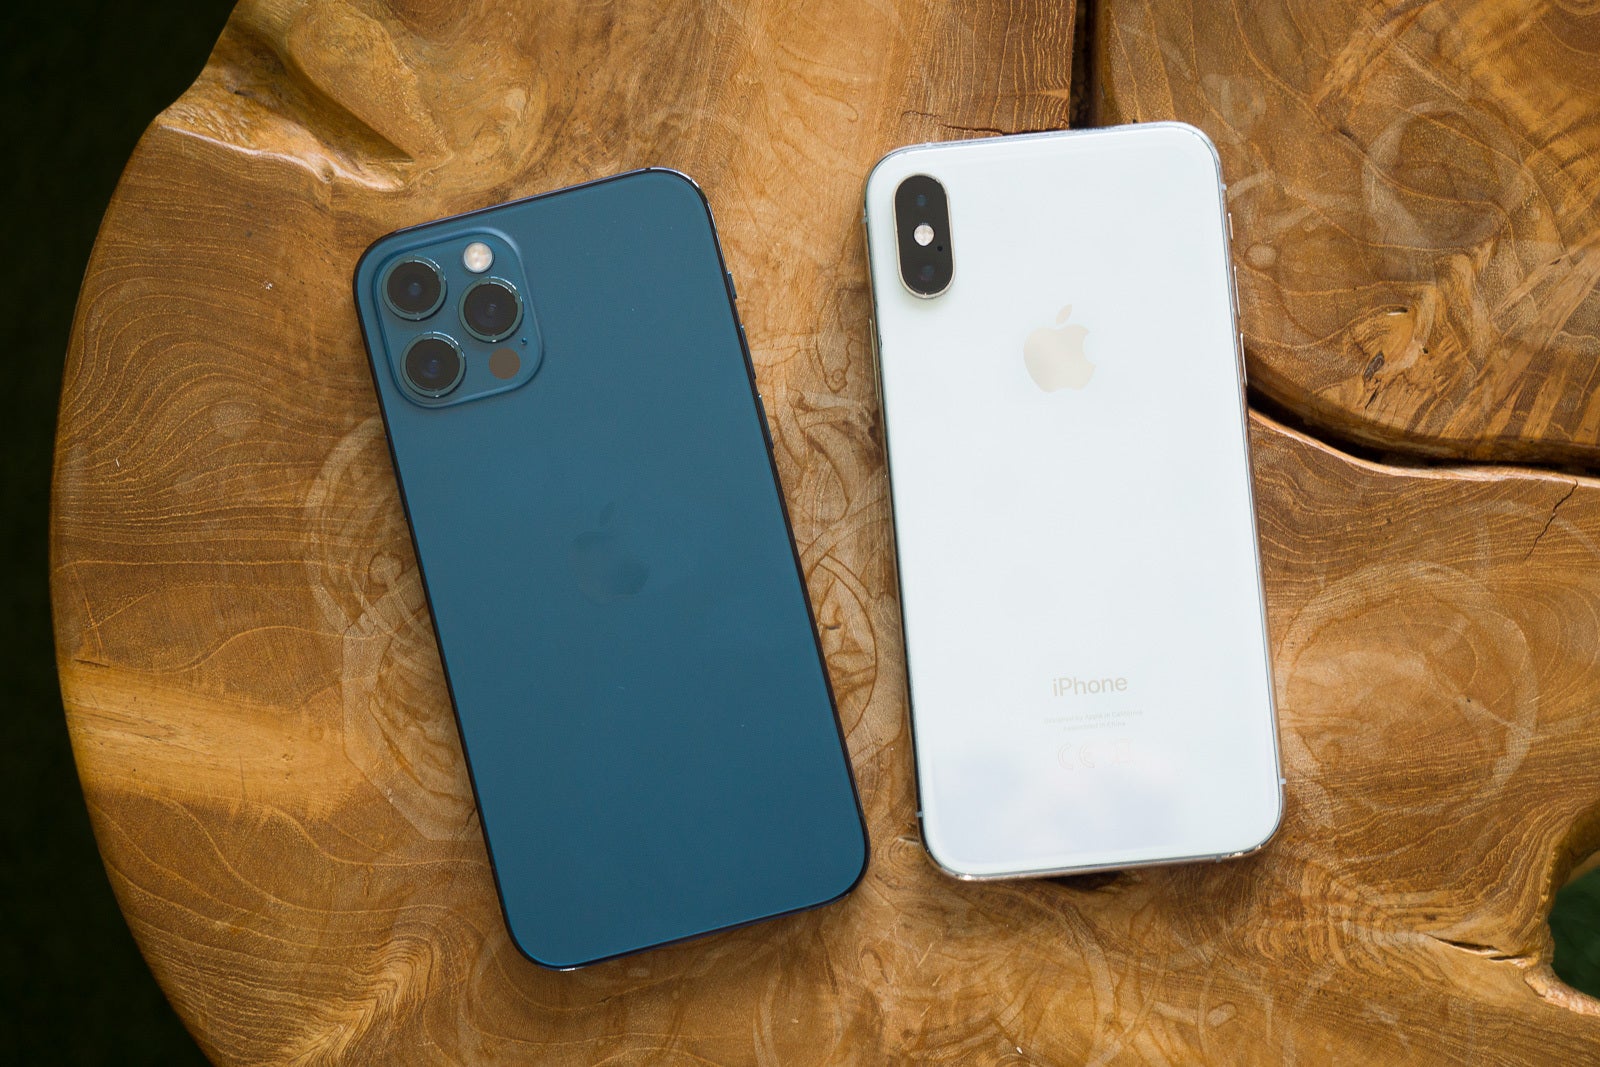 Apple iPhone 12 Pro/Max vs iPhone XS/Max